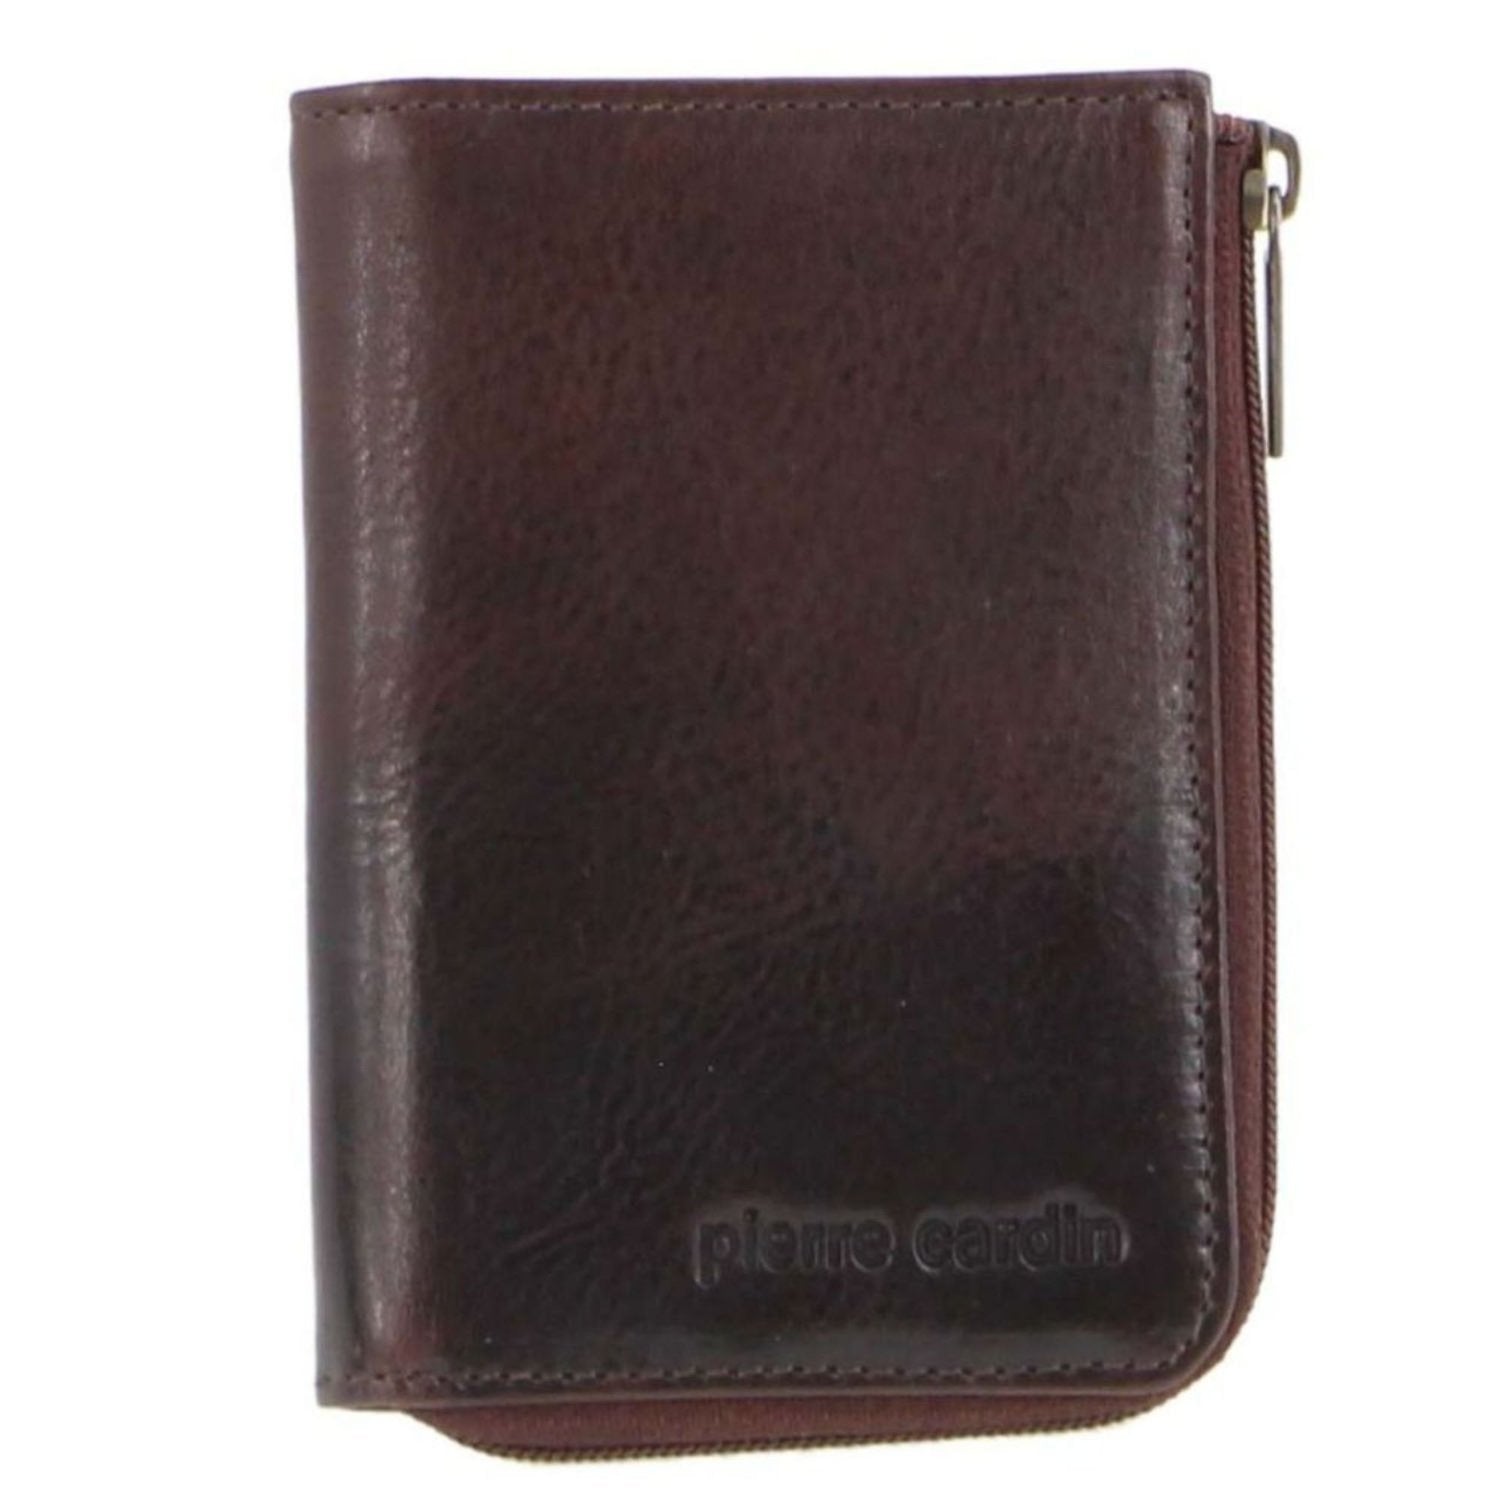 Pierre Cardin Italian Leather Key + Credit Card Holder in Chocolate